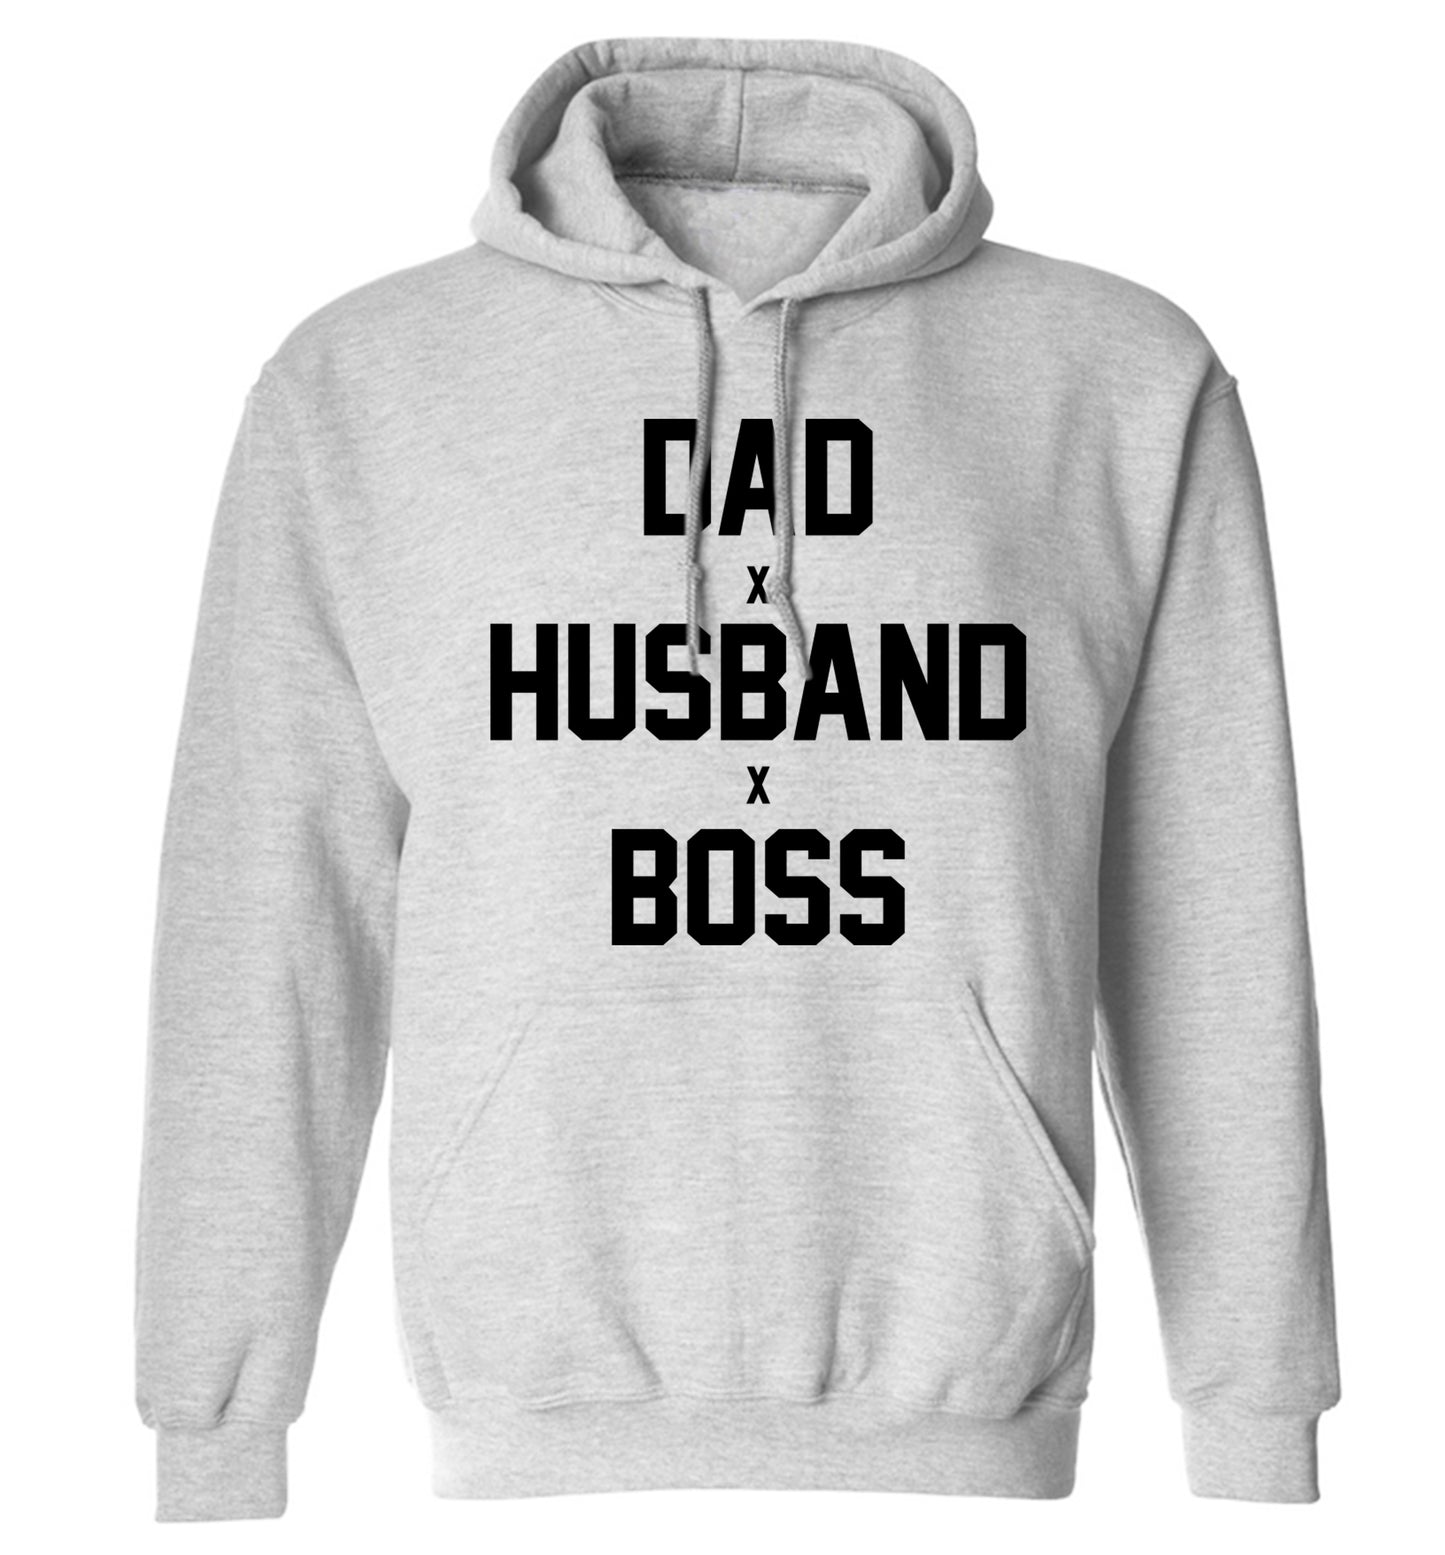 Dad husband boss adults unisex grey hoodie 2XL